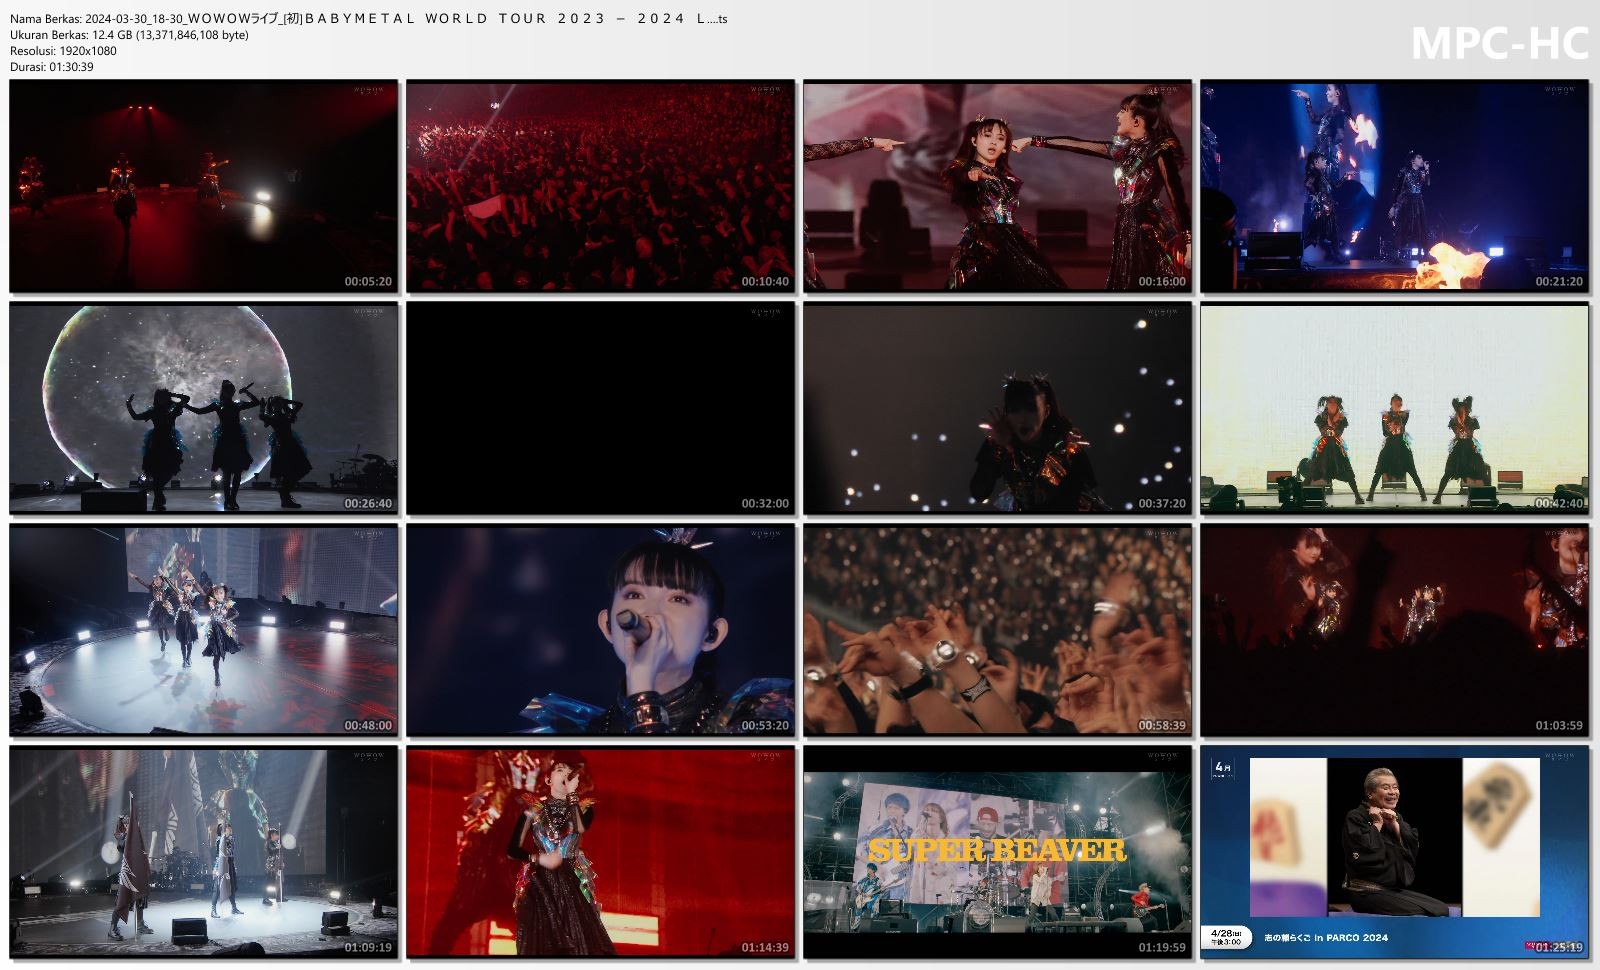 [TV-Show] ベビーメタル - BABYMETAL WORLD TOUR 2023 (2024 LEGEND - MM 20 NIGHT (2024.03.30/TS/12.45GB)